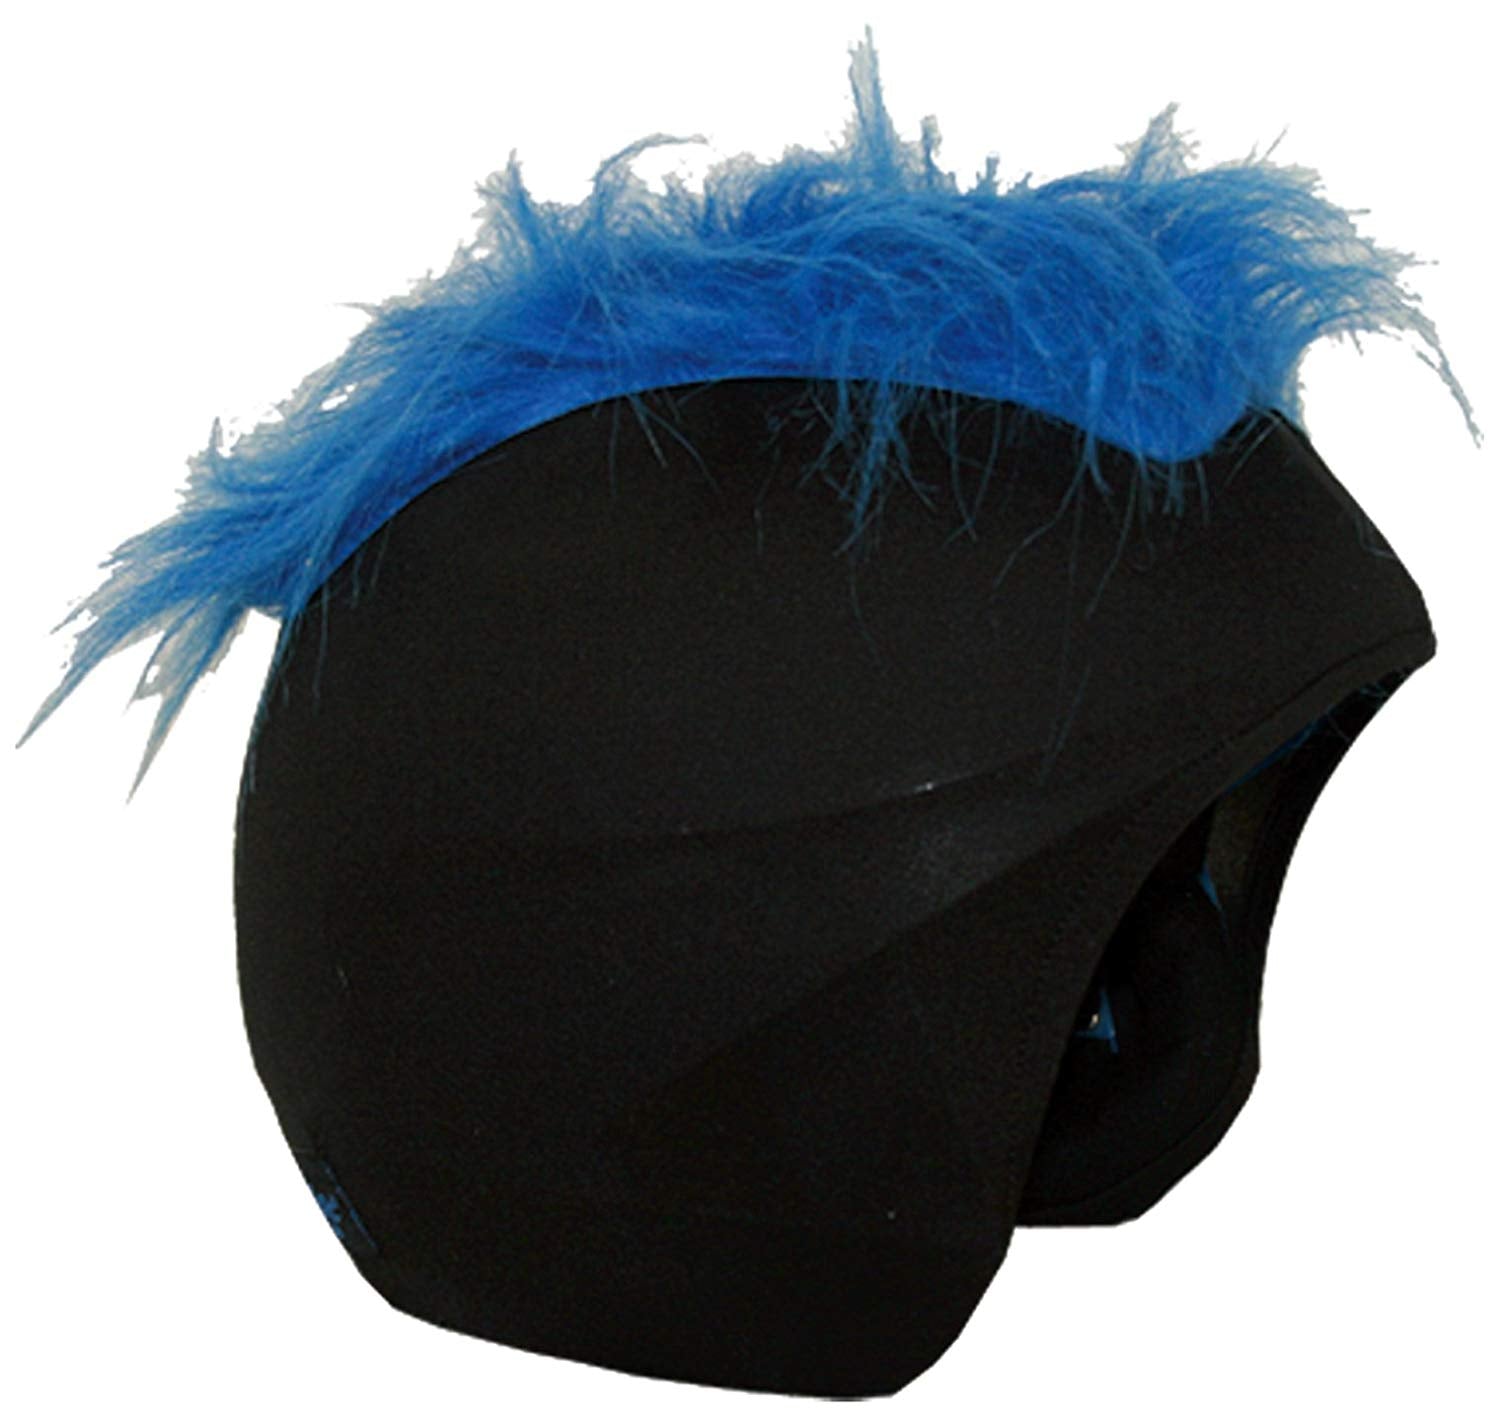 Coolcasc Furry Blue Helmet Cover